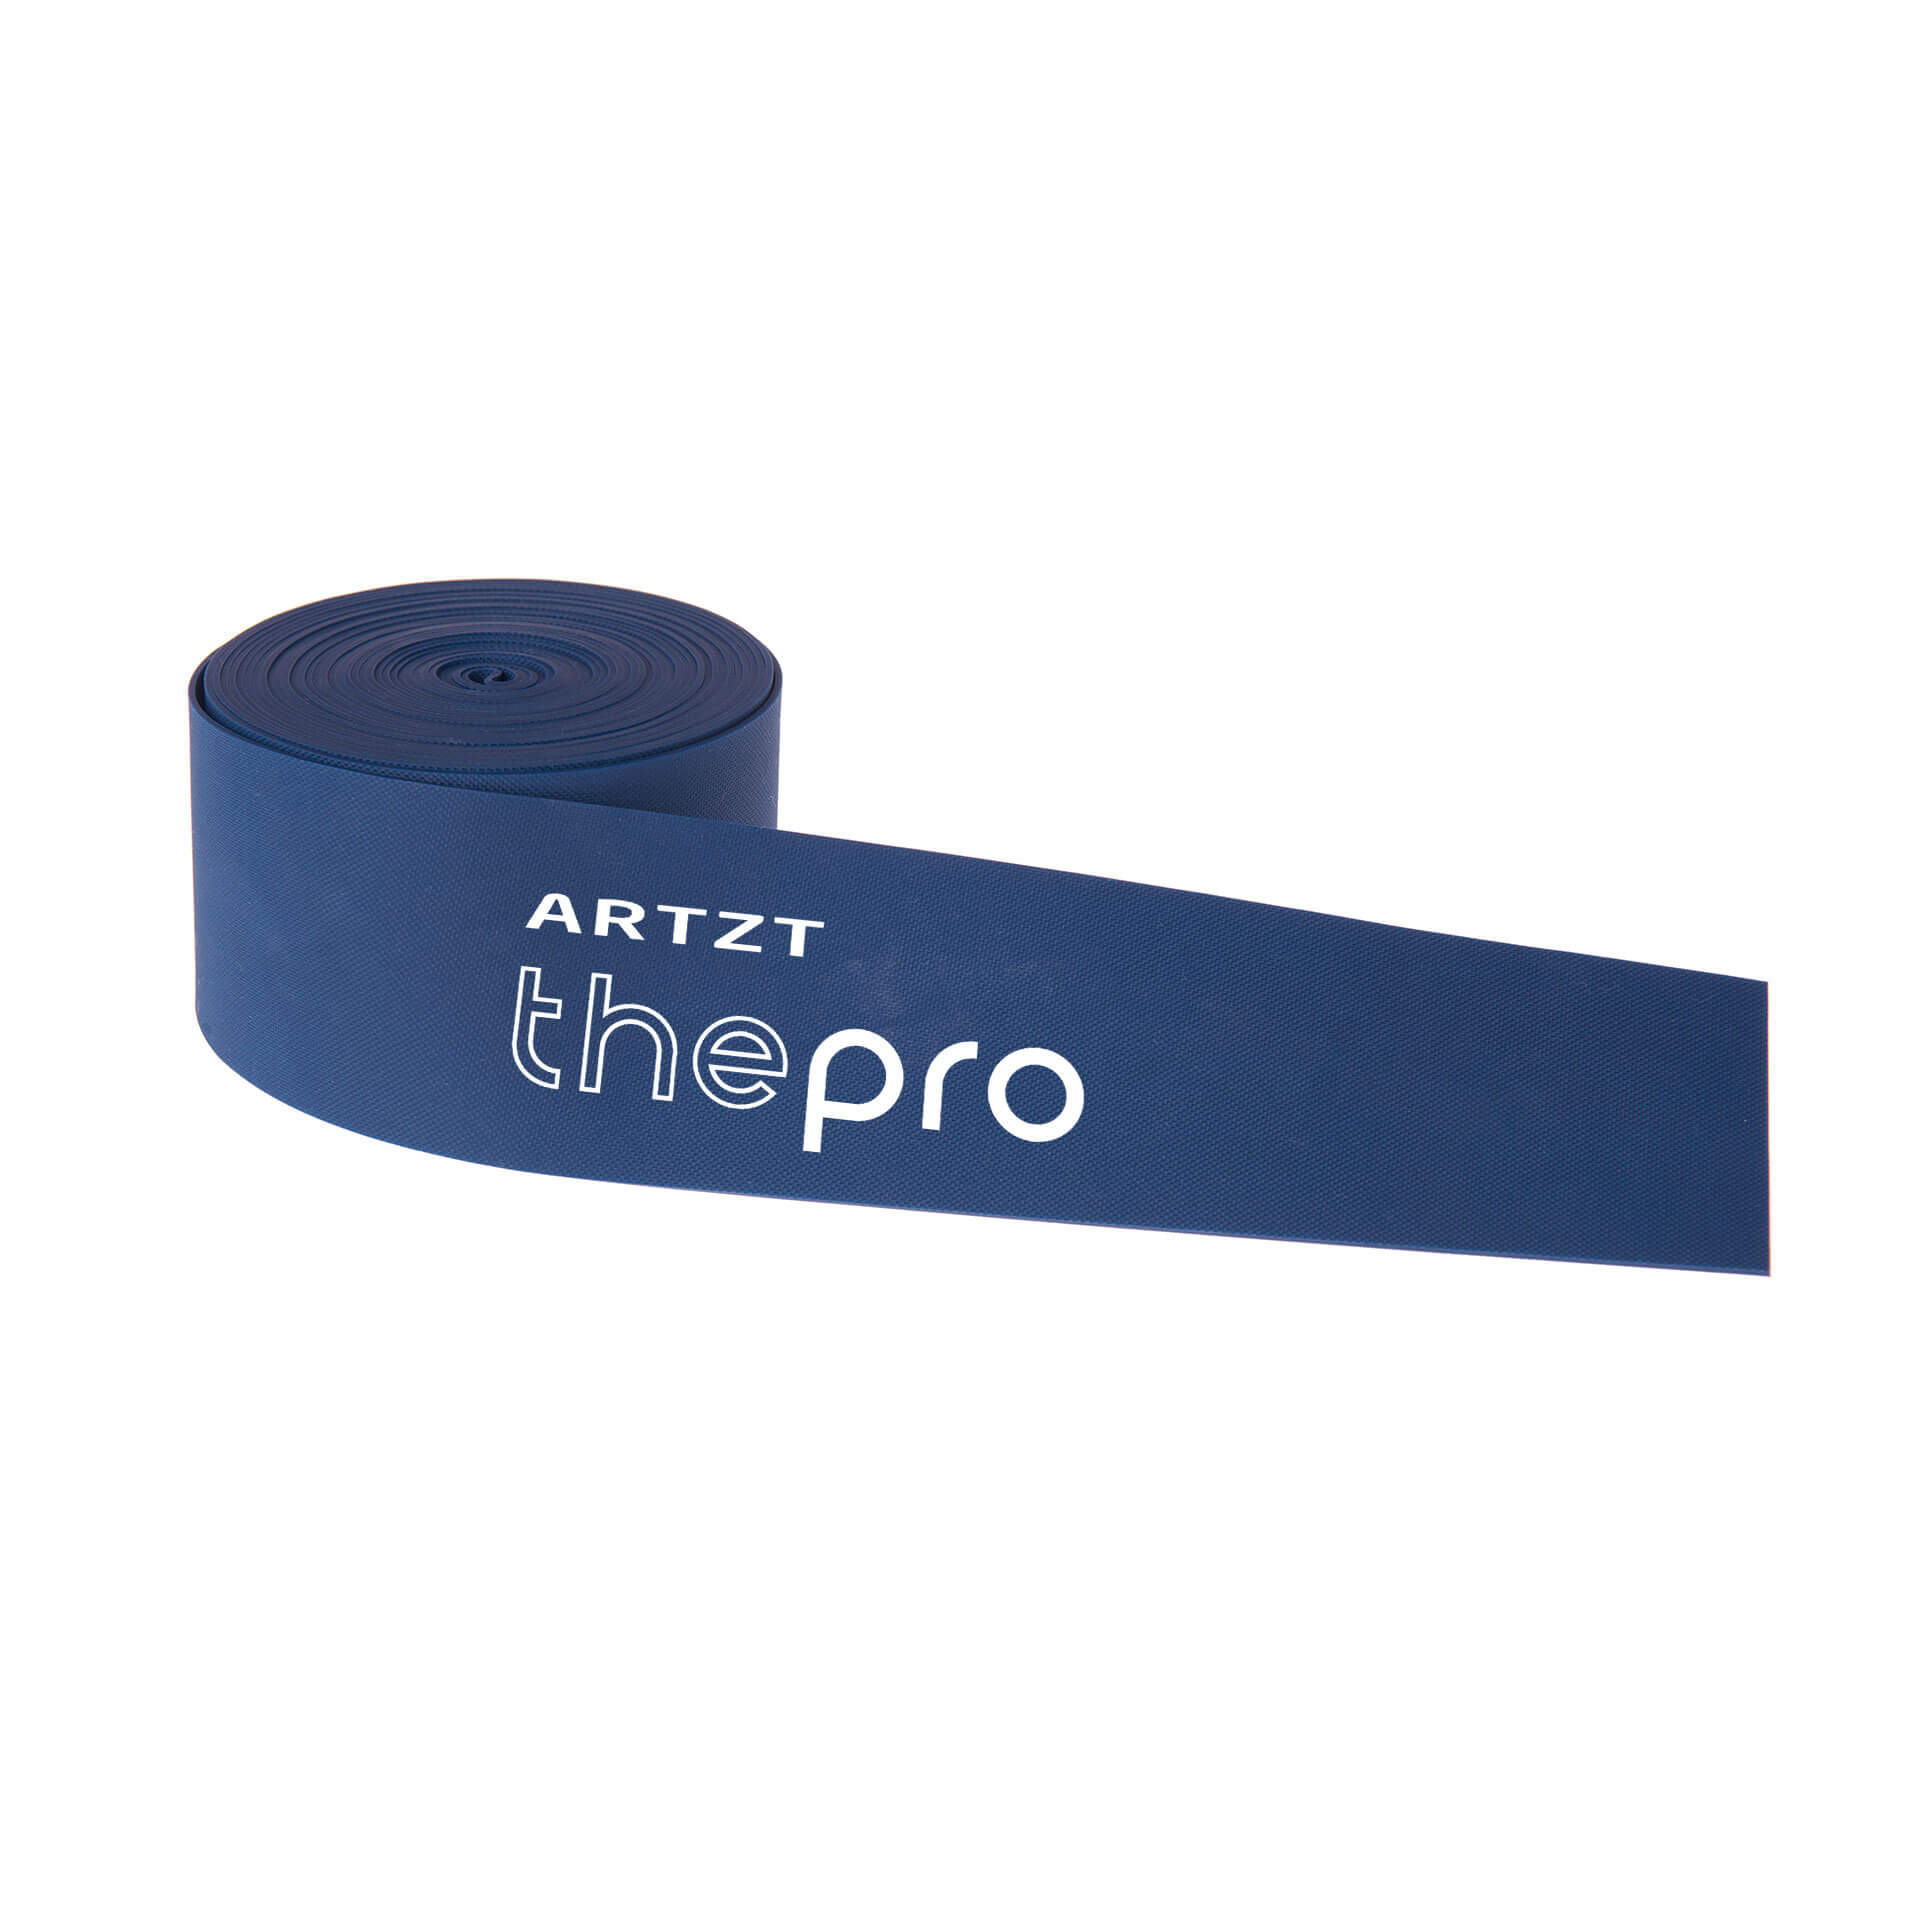 Flossband Flossband ARTZT thepro 5 m | Blau  